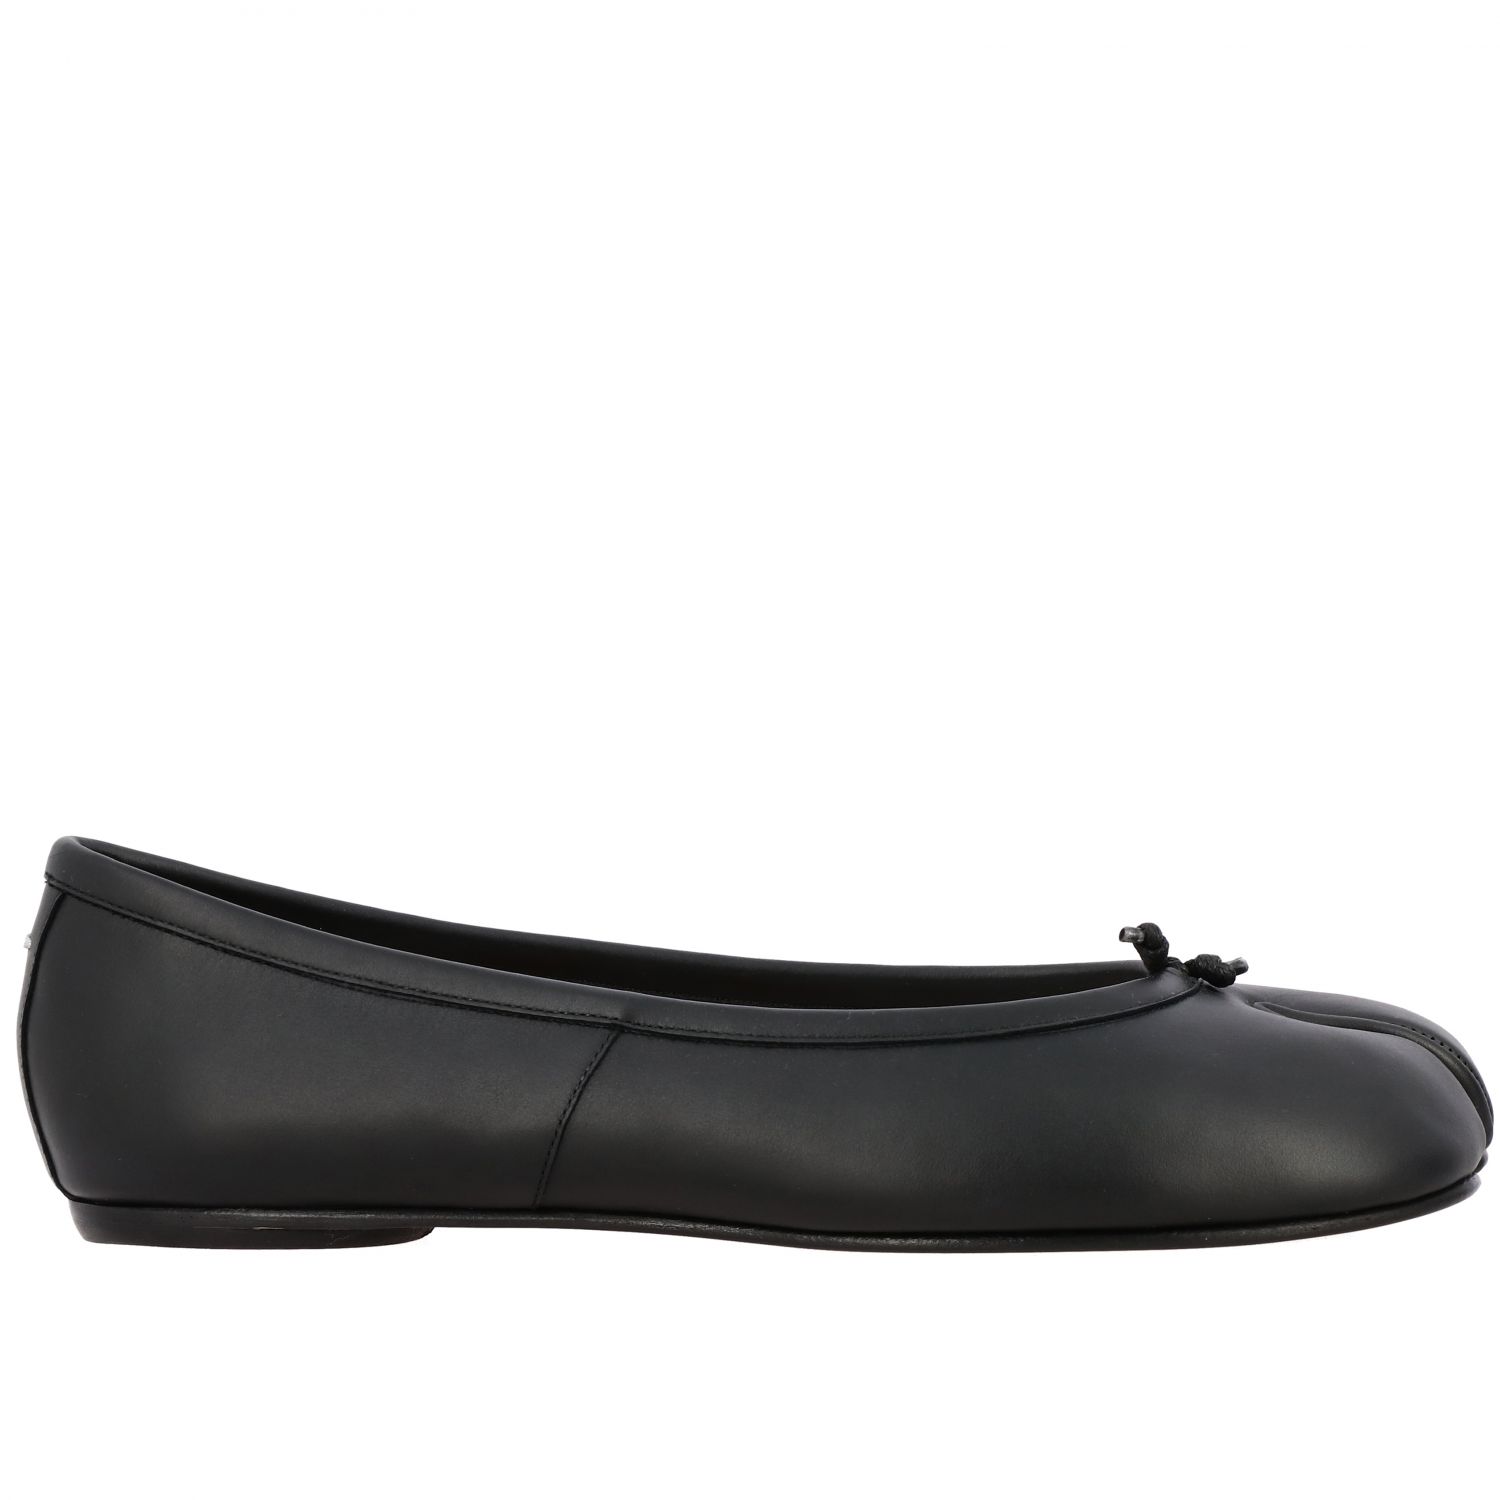 芭蕾平底鞋 Maison Margiela: Maison Margiela Tabi 真皮芭蕾舞鞋 黑色 1